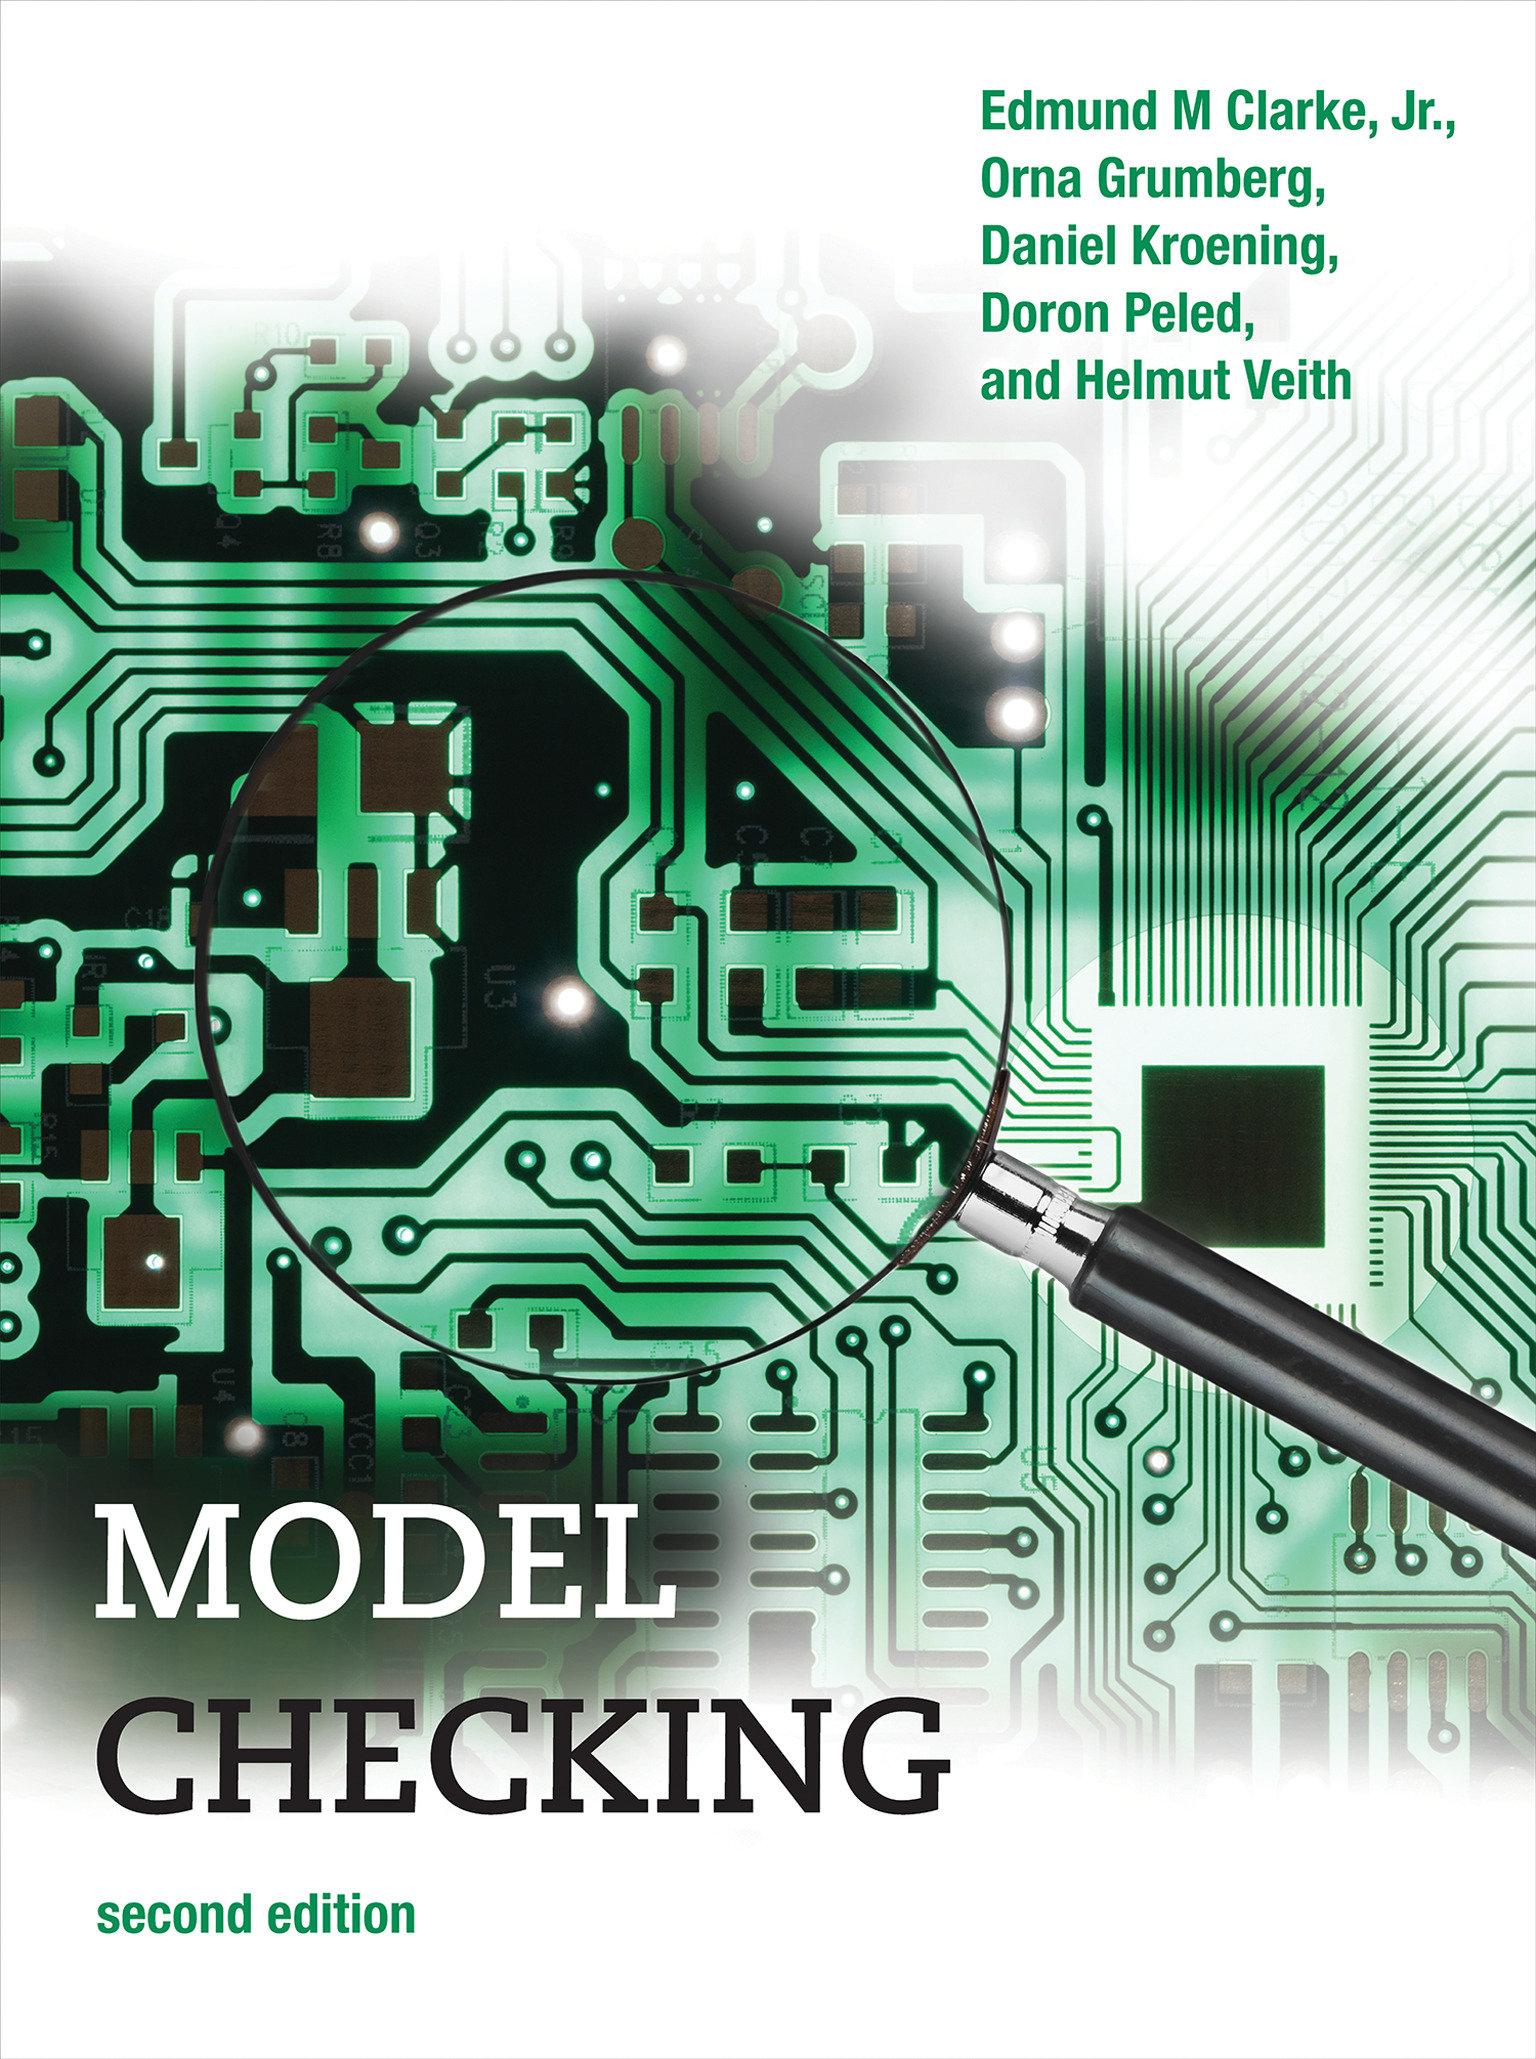 Model Checking / Edmund M. Clarke Jr. (u. a.) / Buch / Cyber Physical Systems Series / Einband - fest (Hardcover) / Englisch / 2018 / MIT Press Ltd / EAN 9780262038836 - Jr., Edmund M. Clarke (Carnegie Mellon University)